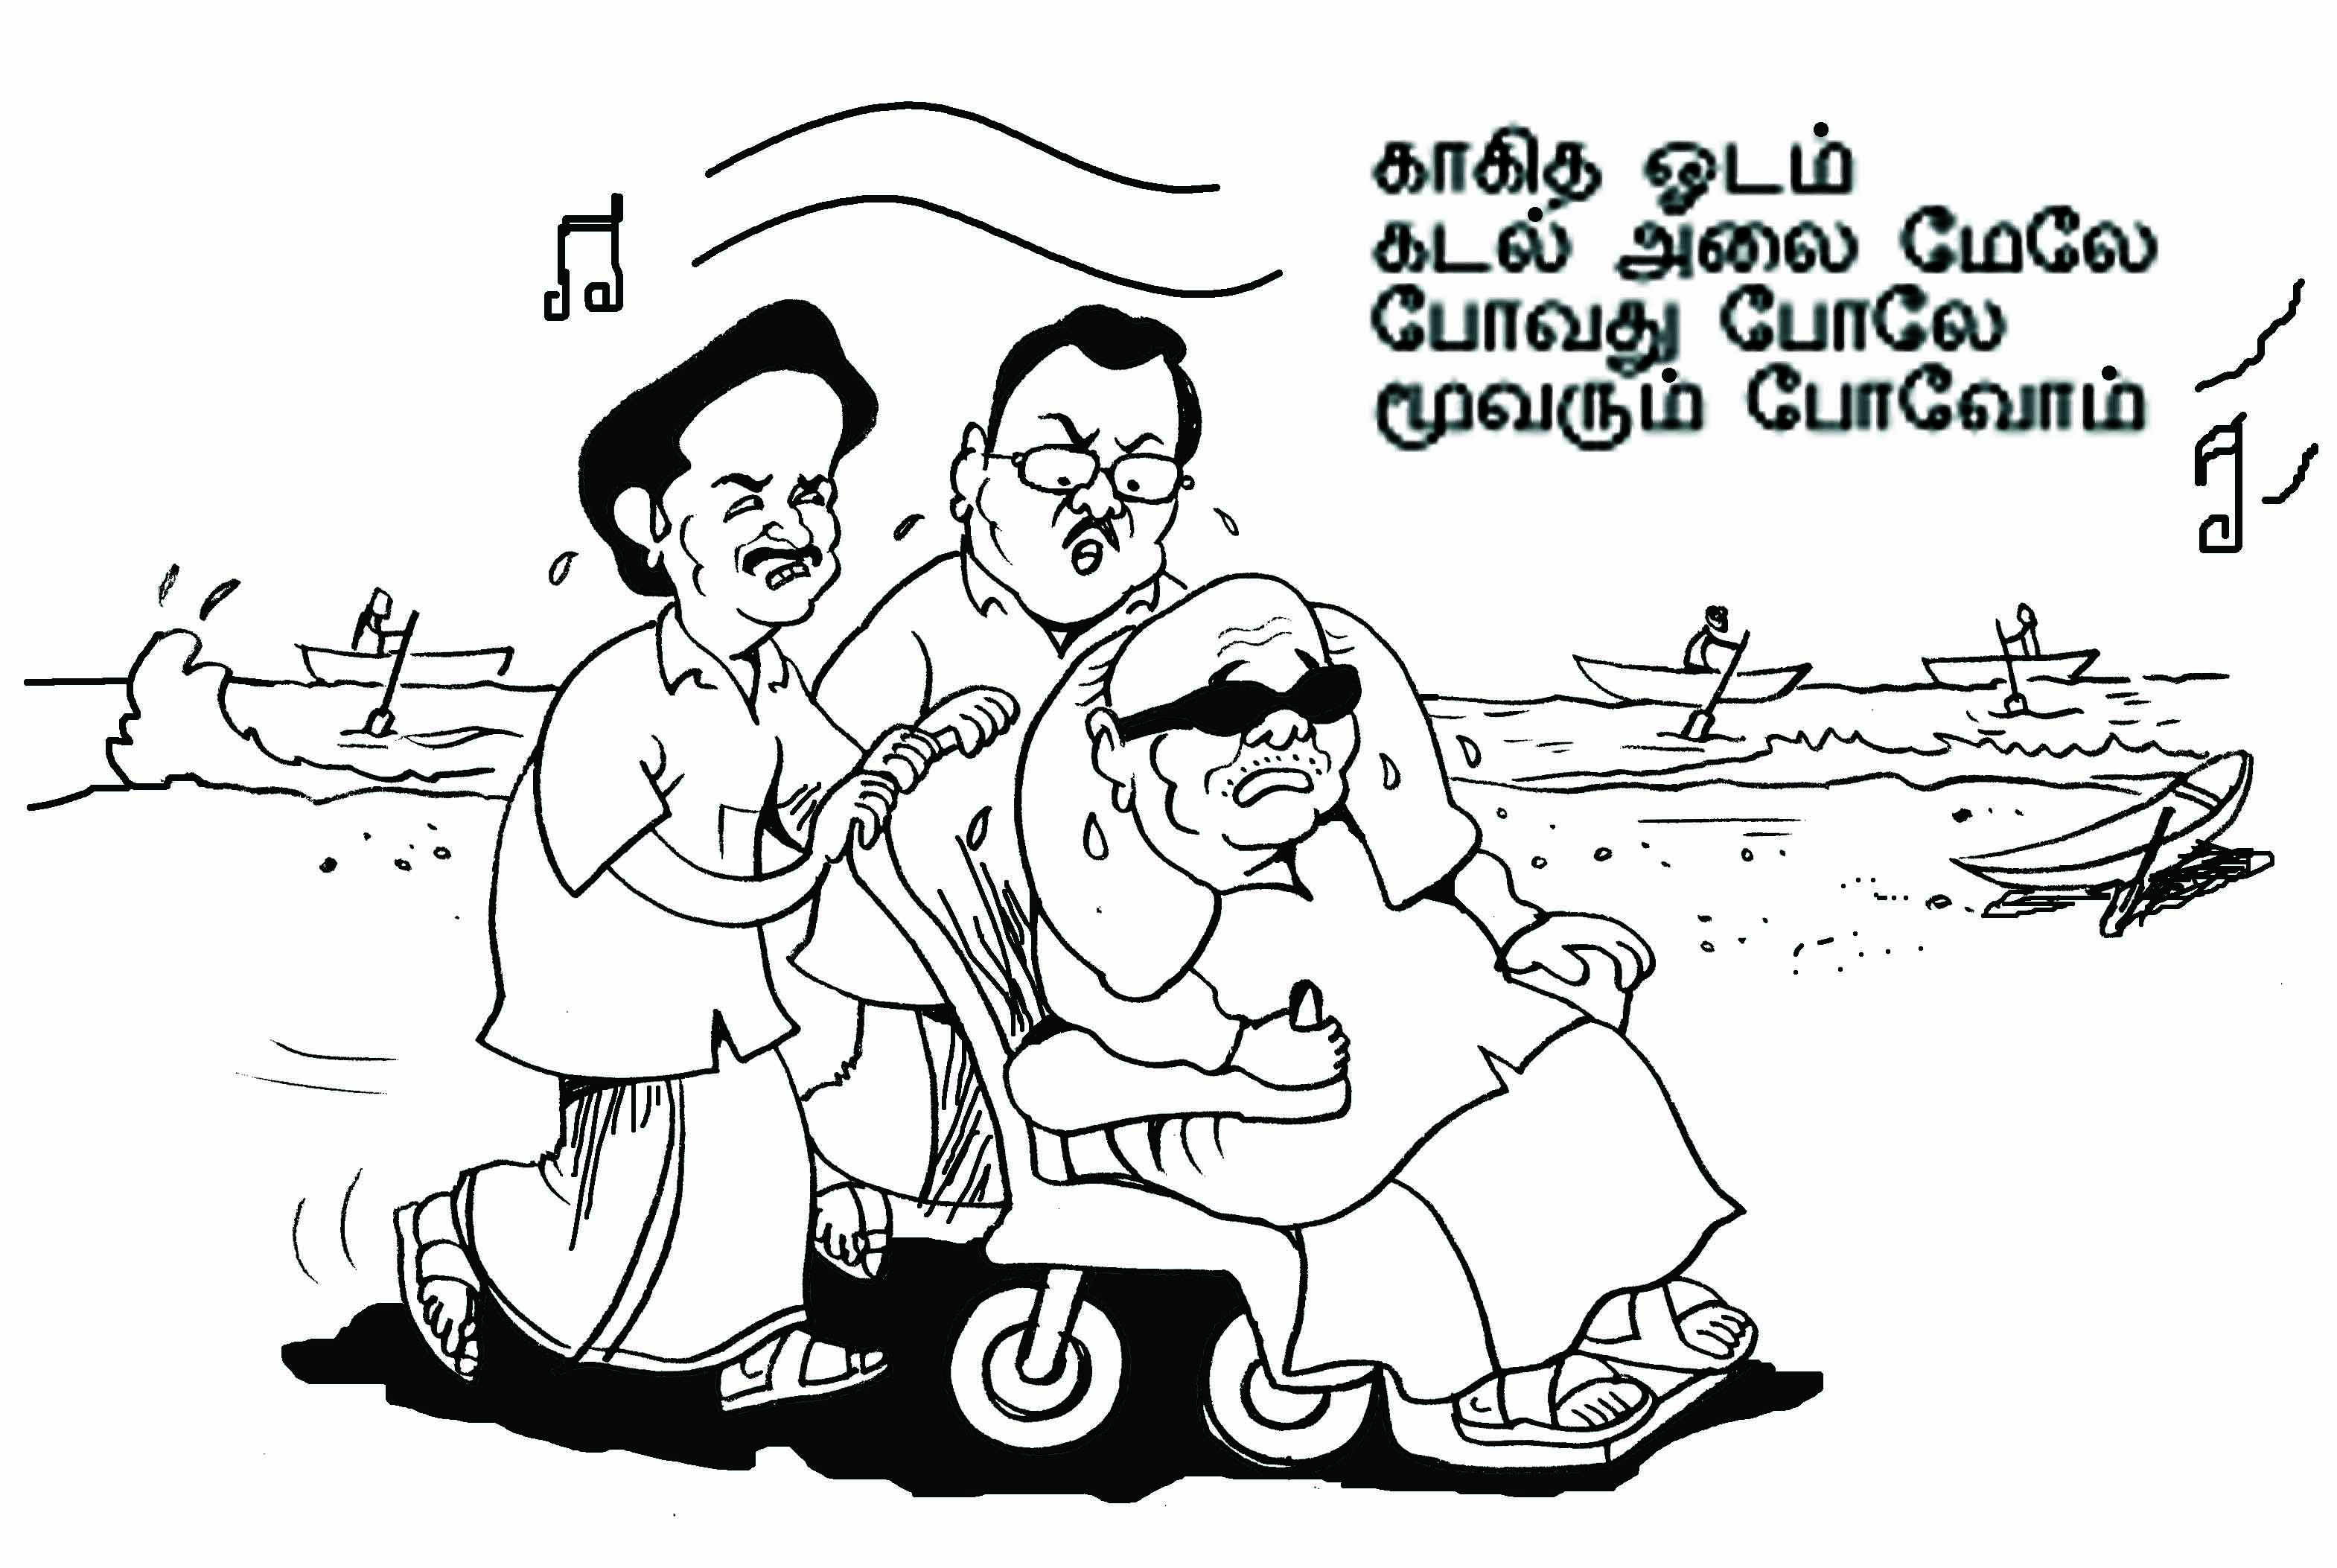 http://www.tamilhindu.com/wp-content/uploads/cartoon-kagidha-odam.jpg